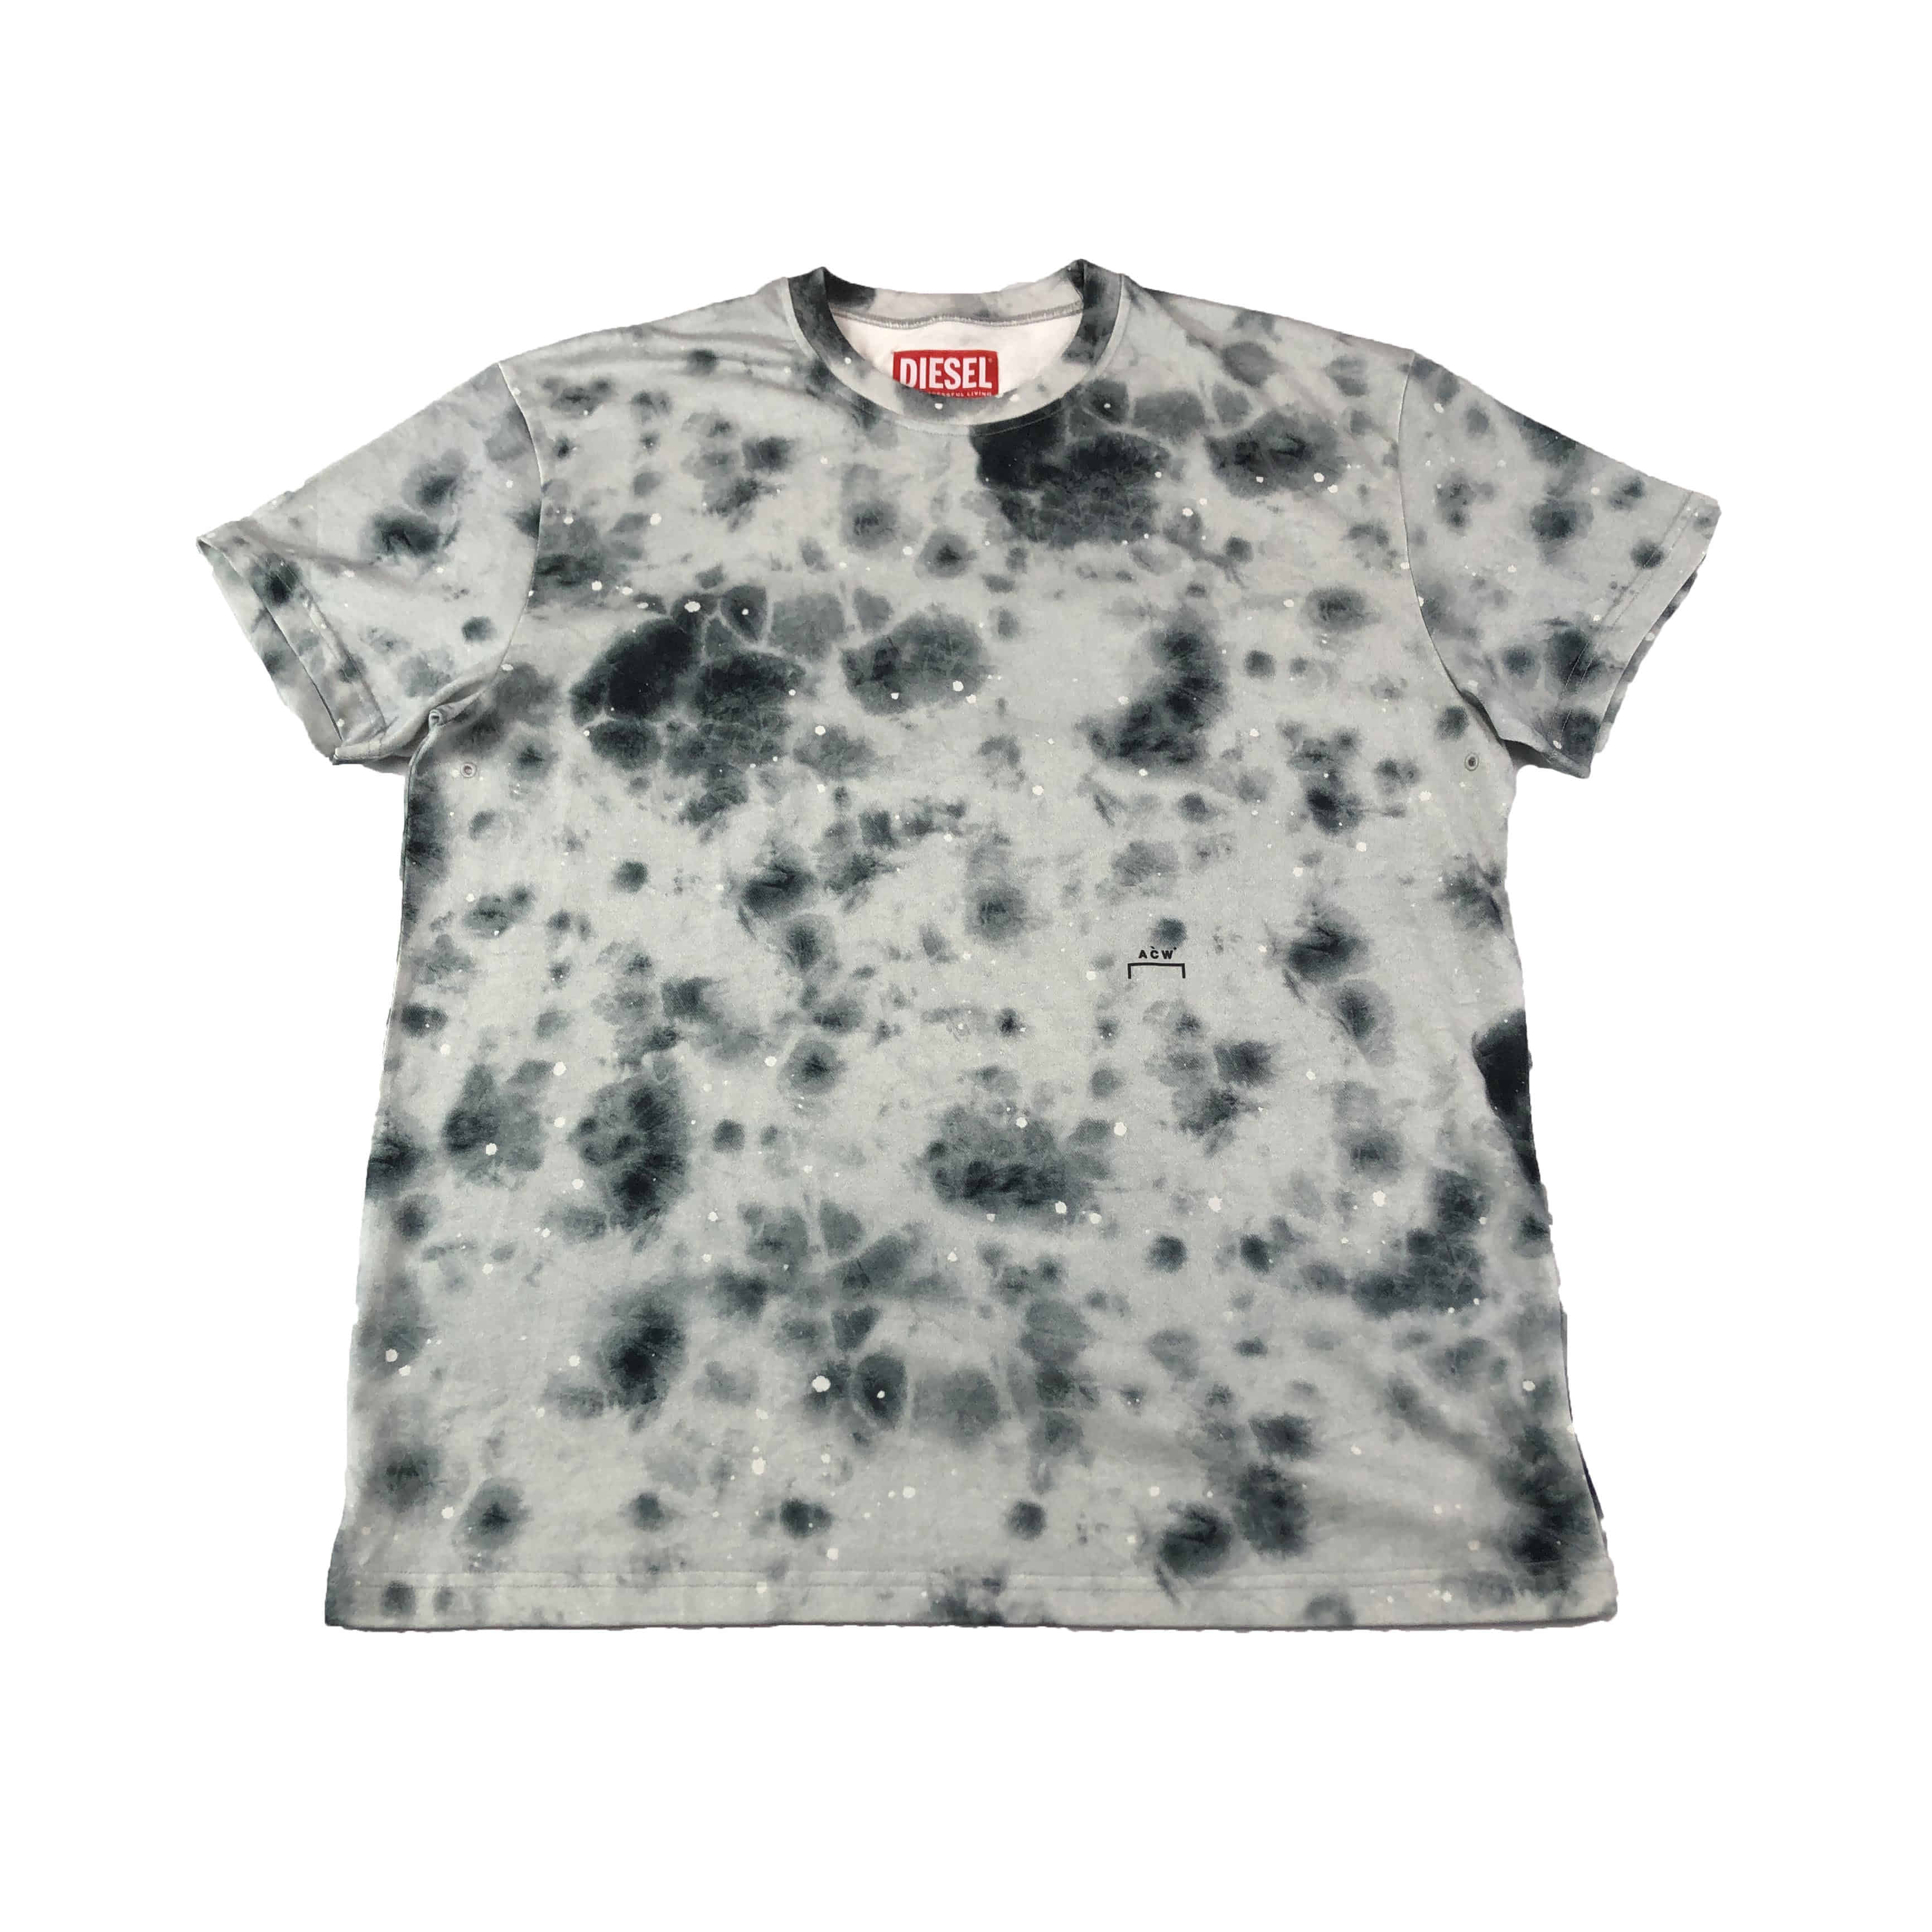 [Diesel X ACW] Light and dark grey tie-dye T-shirt - Size L